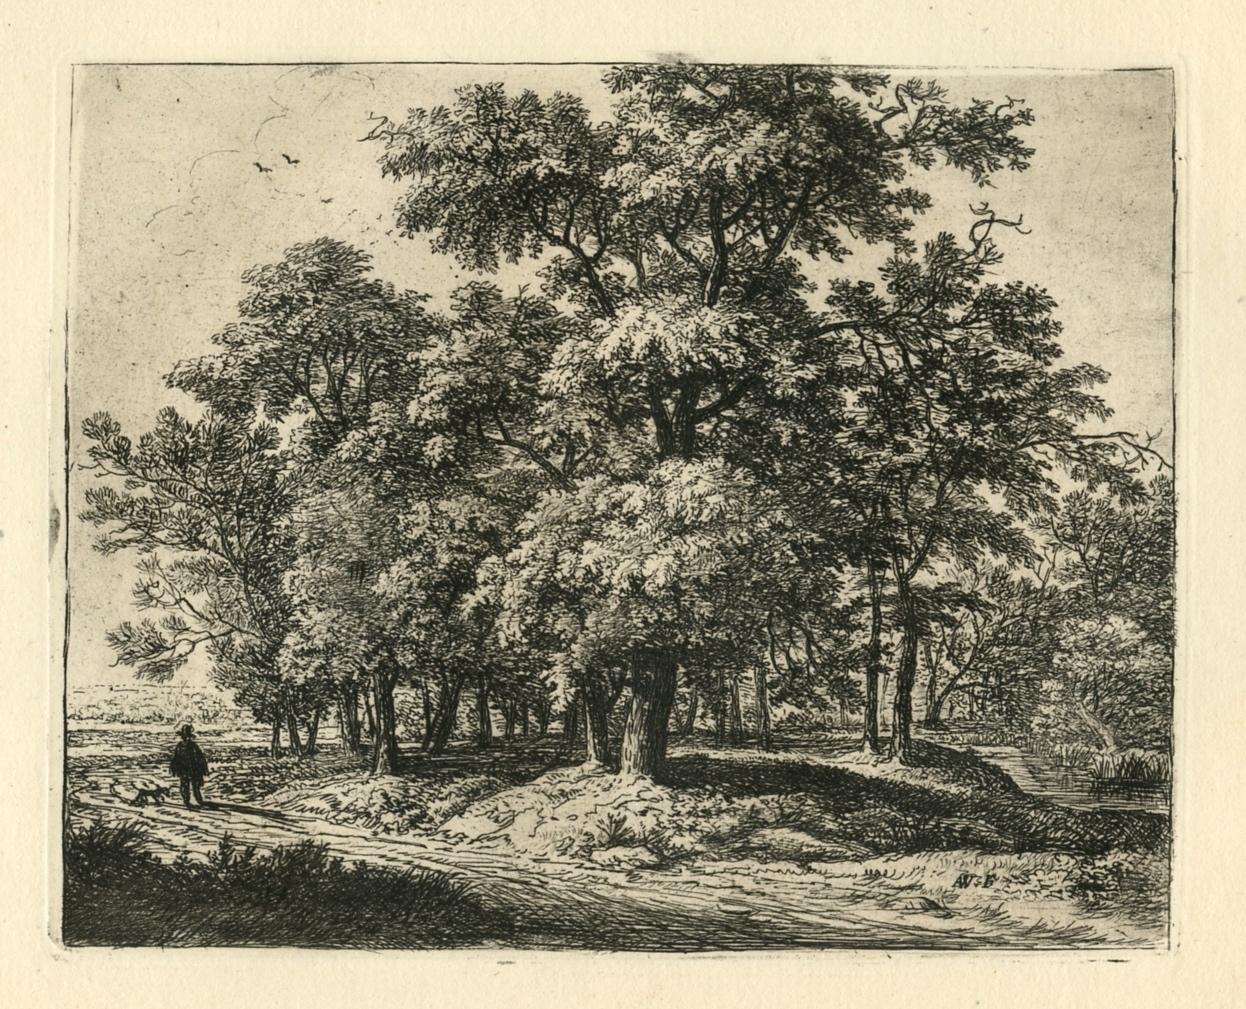 Landscape Print Anthonie Waterloo - « Traveller Near a Wood », gravure originale de voyageur